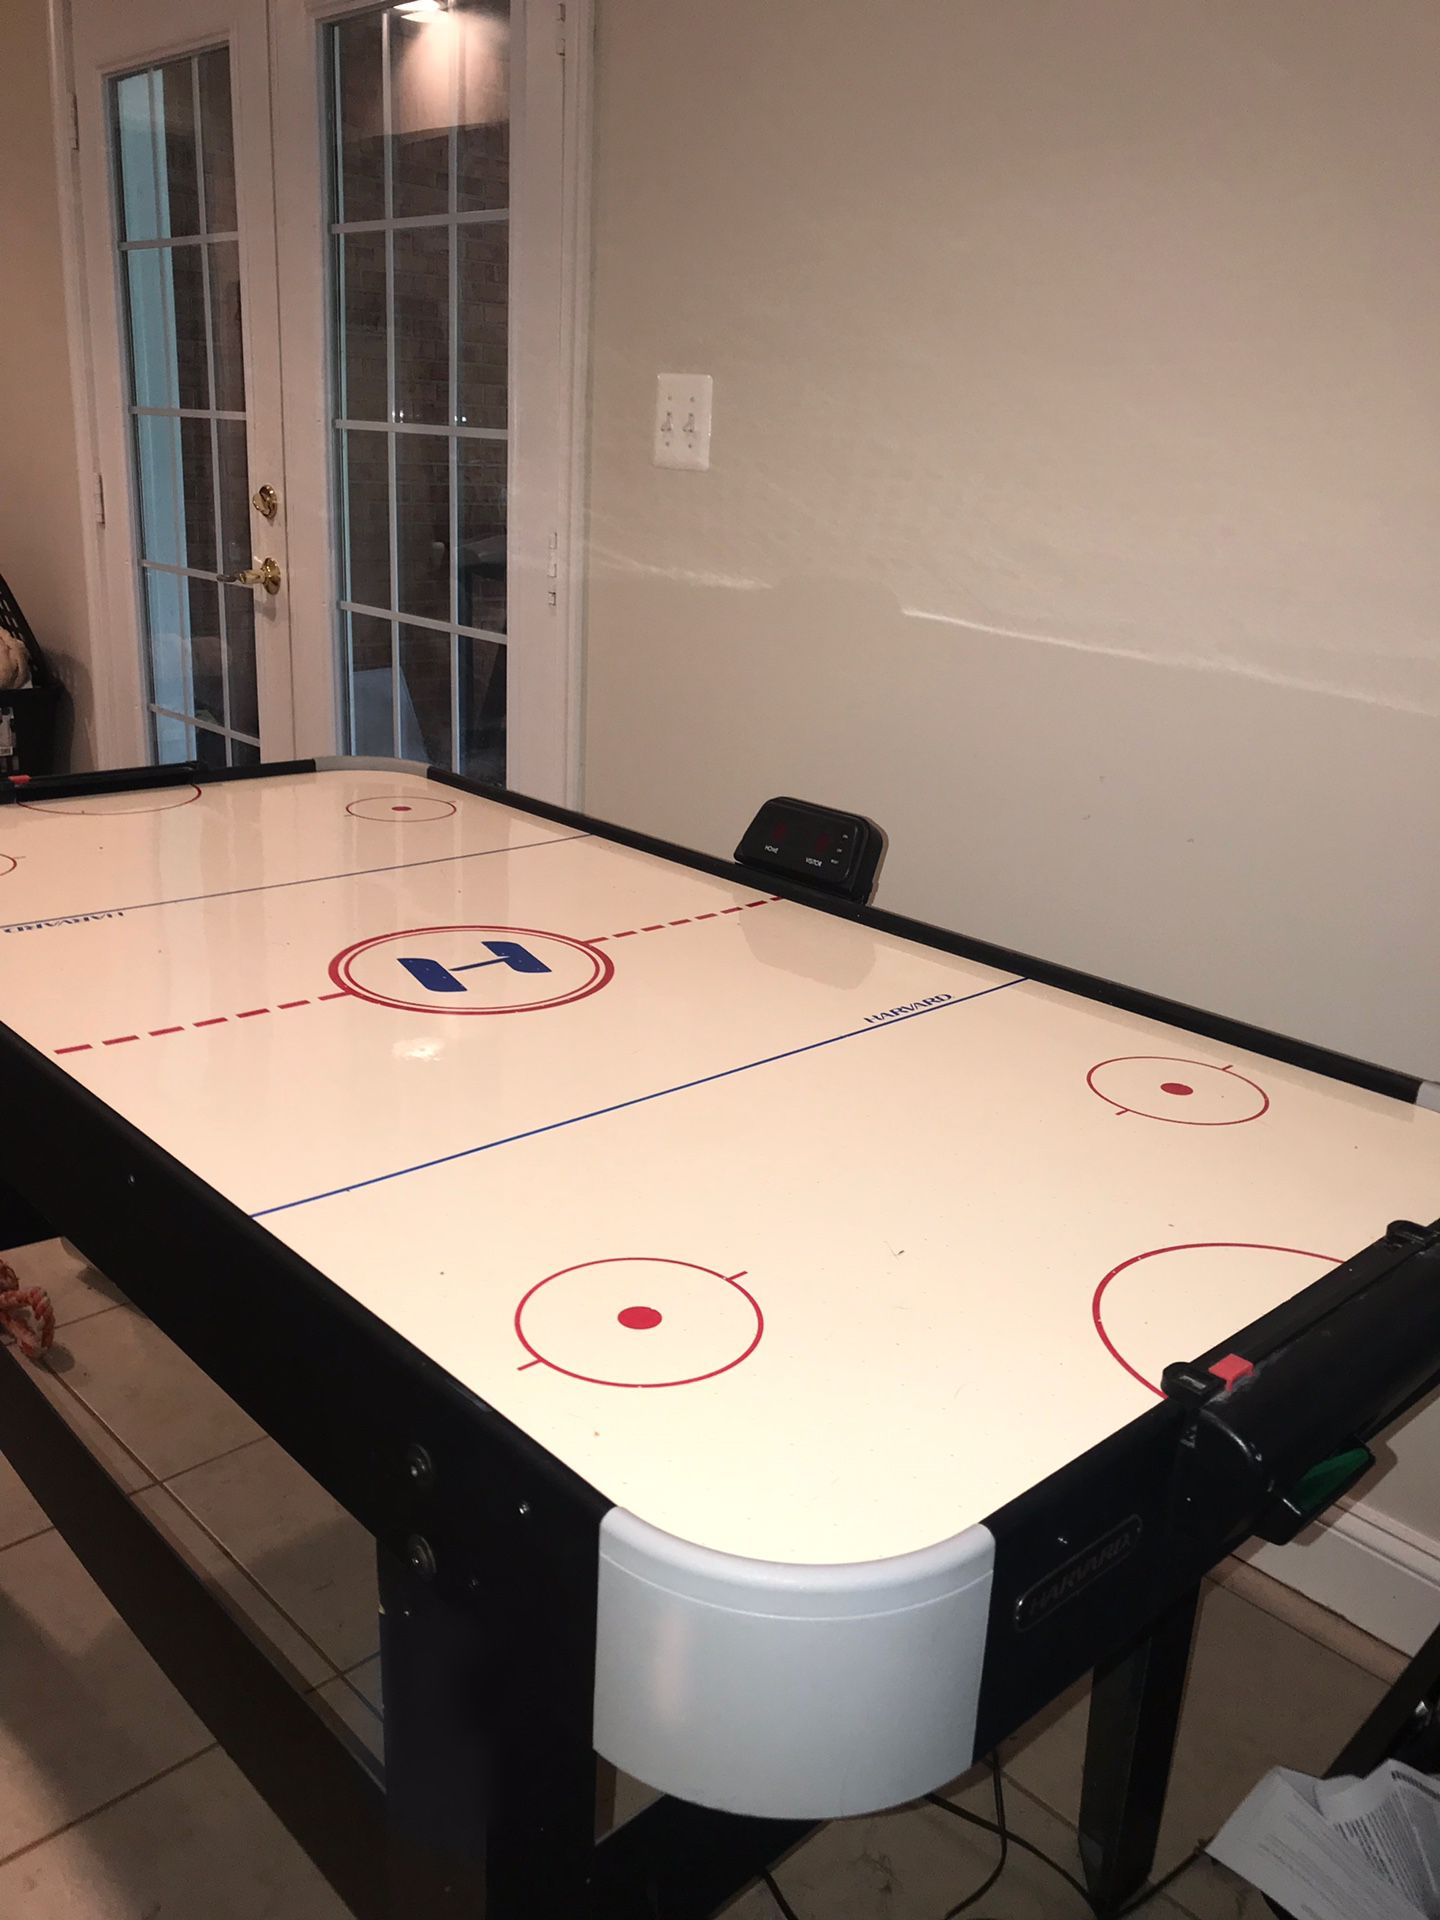 Barely used Harvard Air Hockey Table